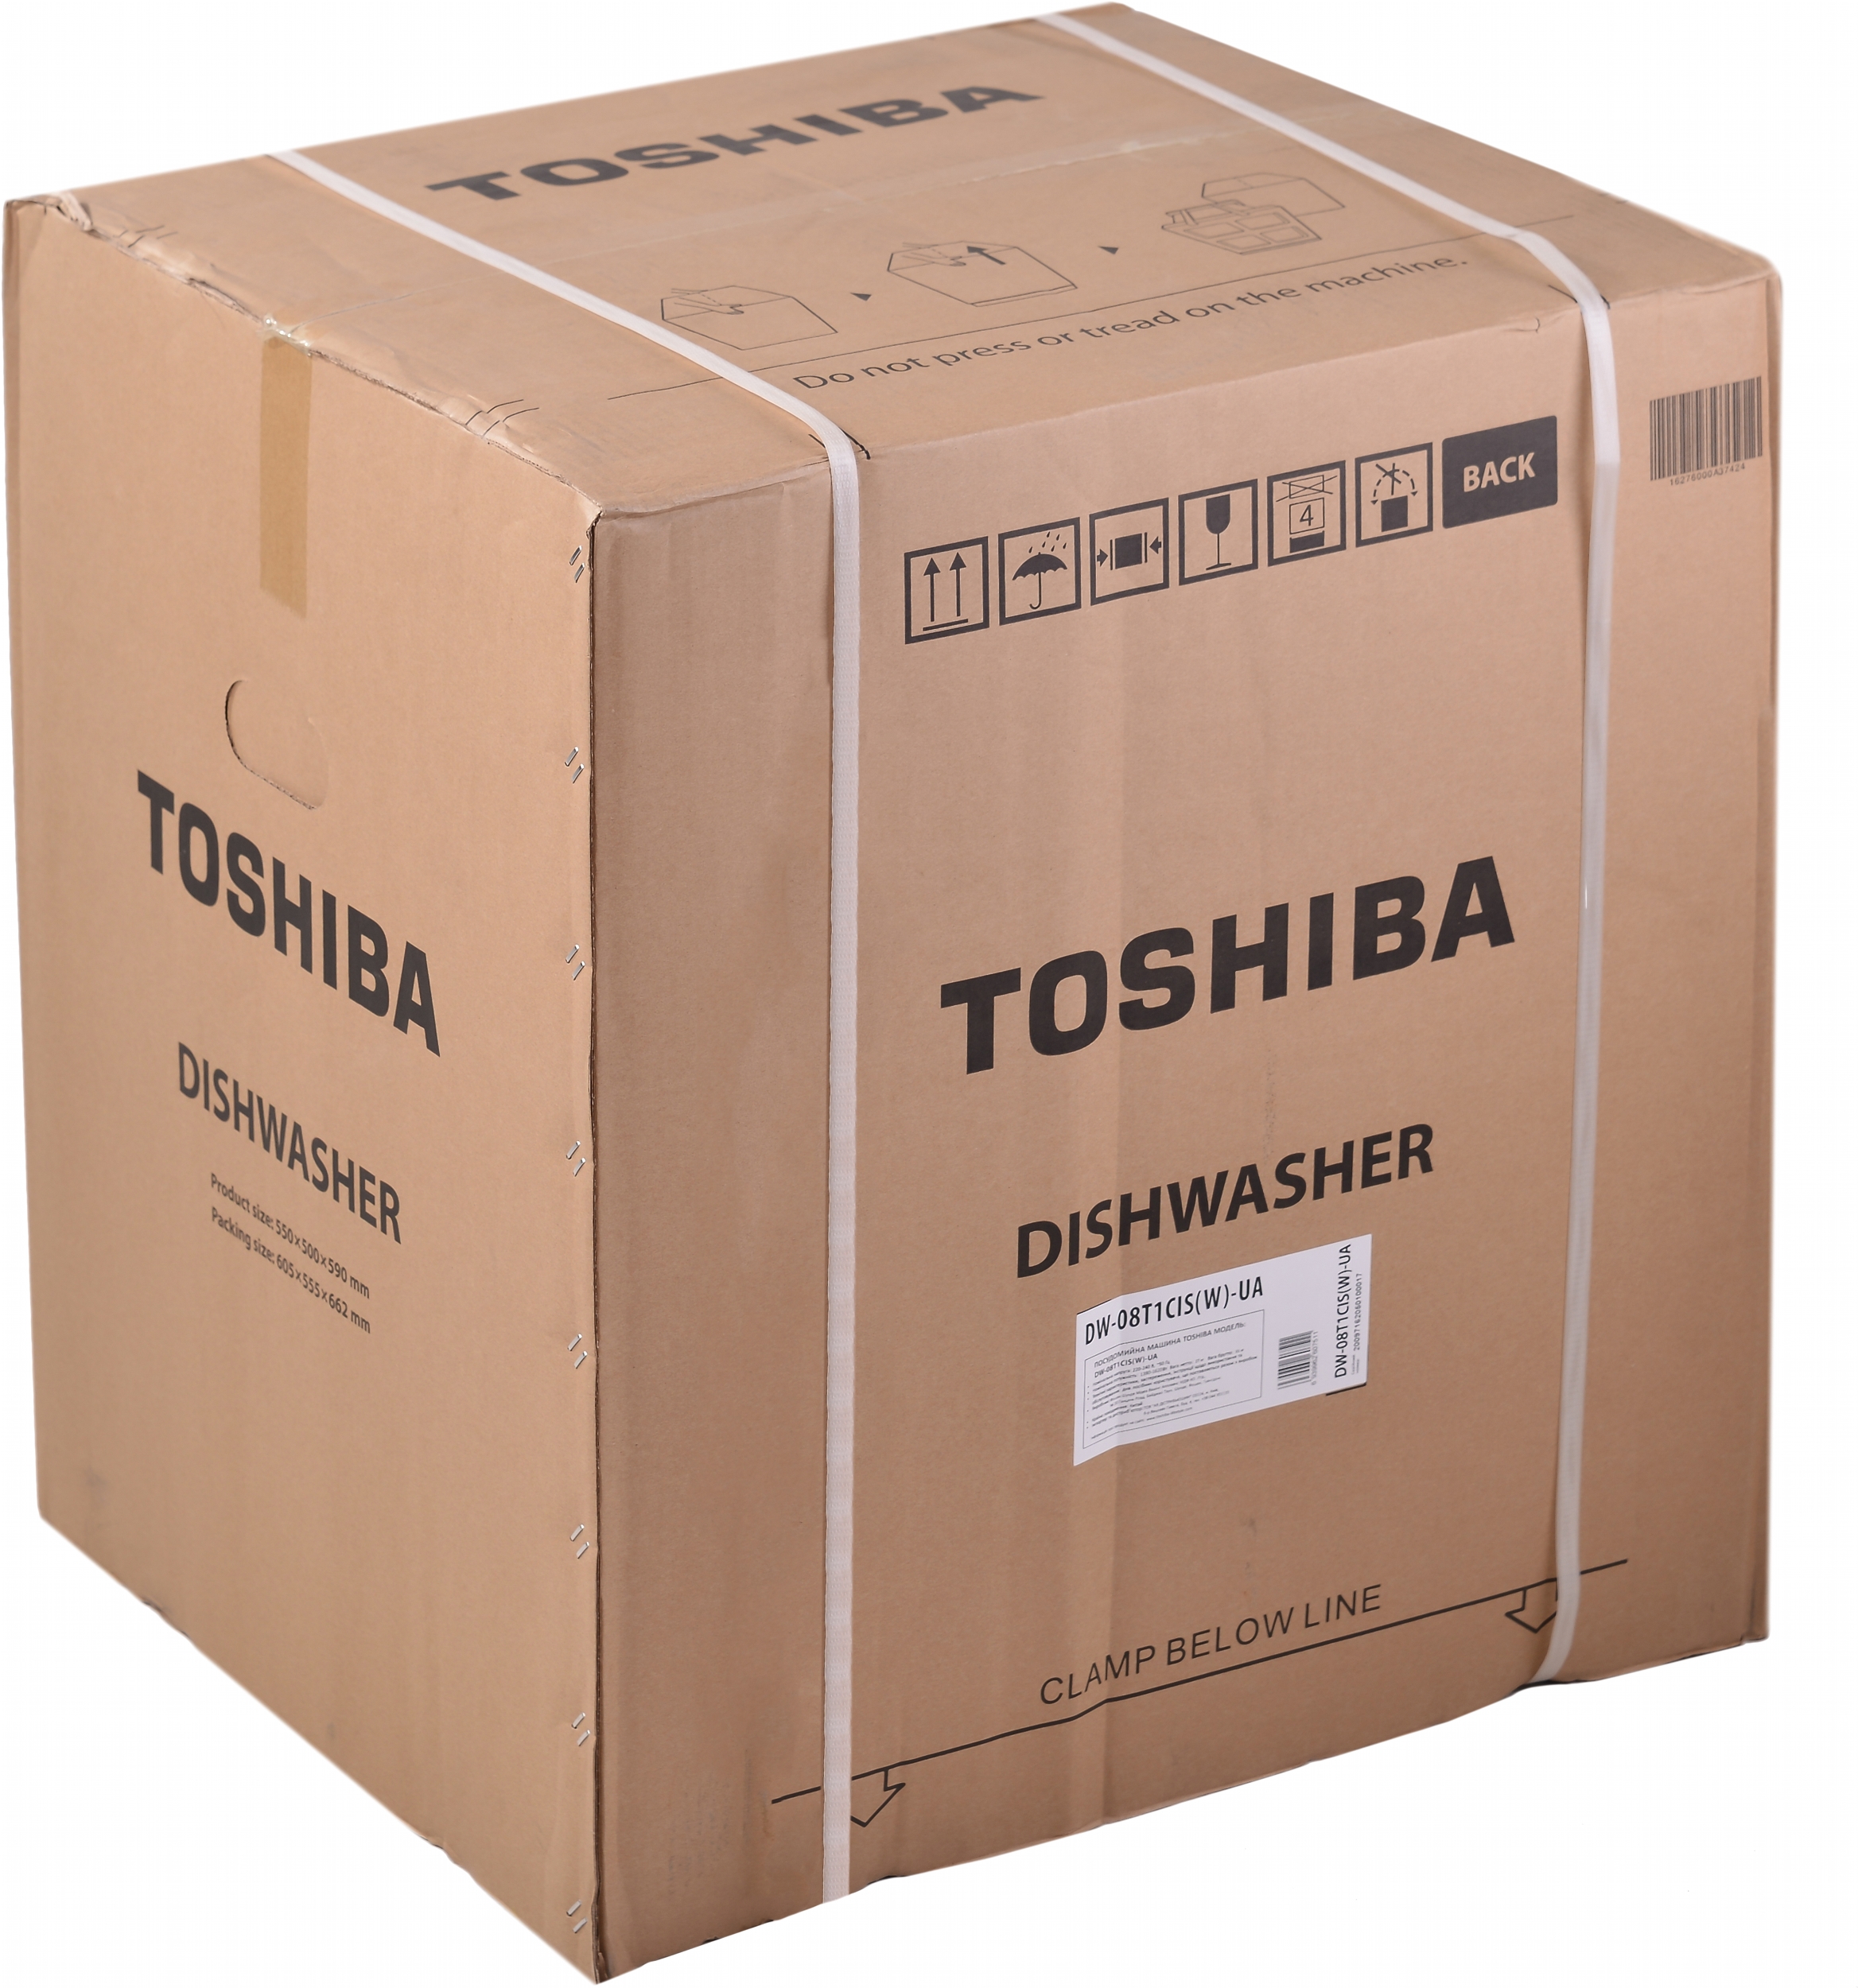 Посудомоечная машина Toshiba DW-08T1CIS(W)-UA обзор - фото 8